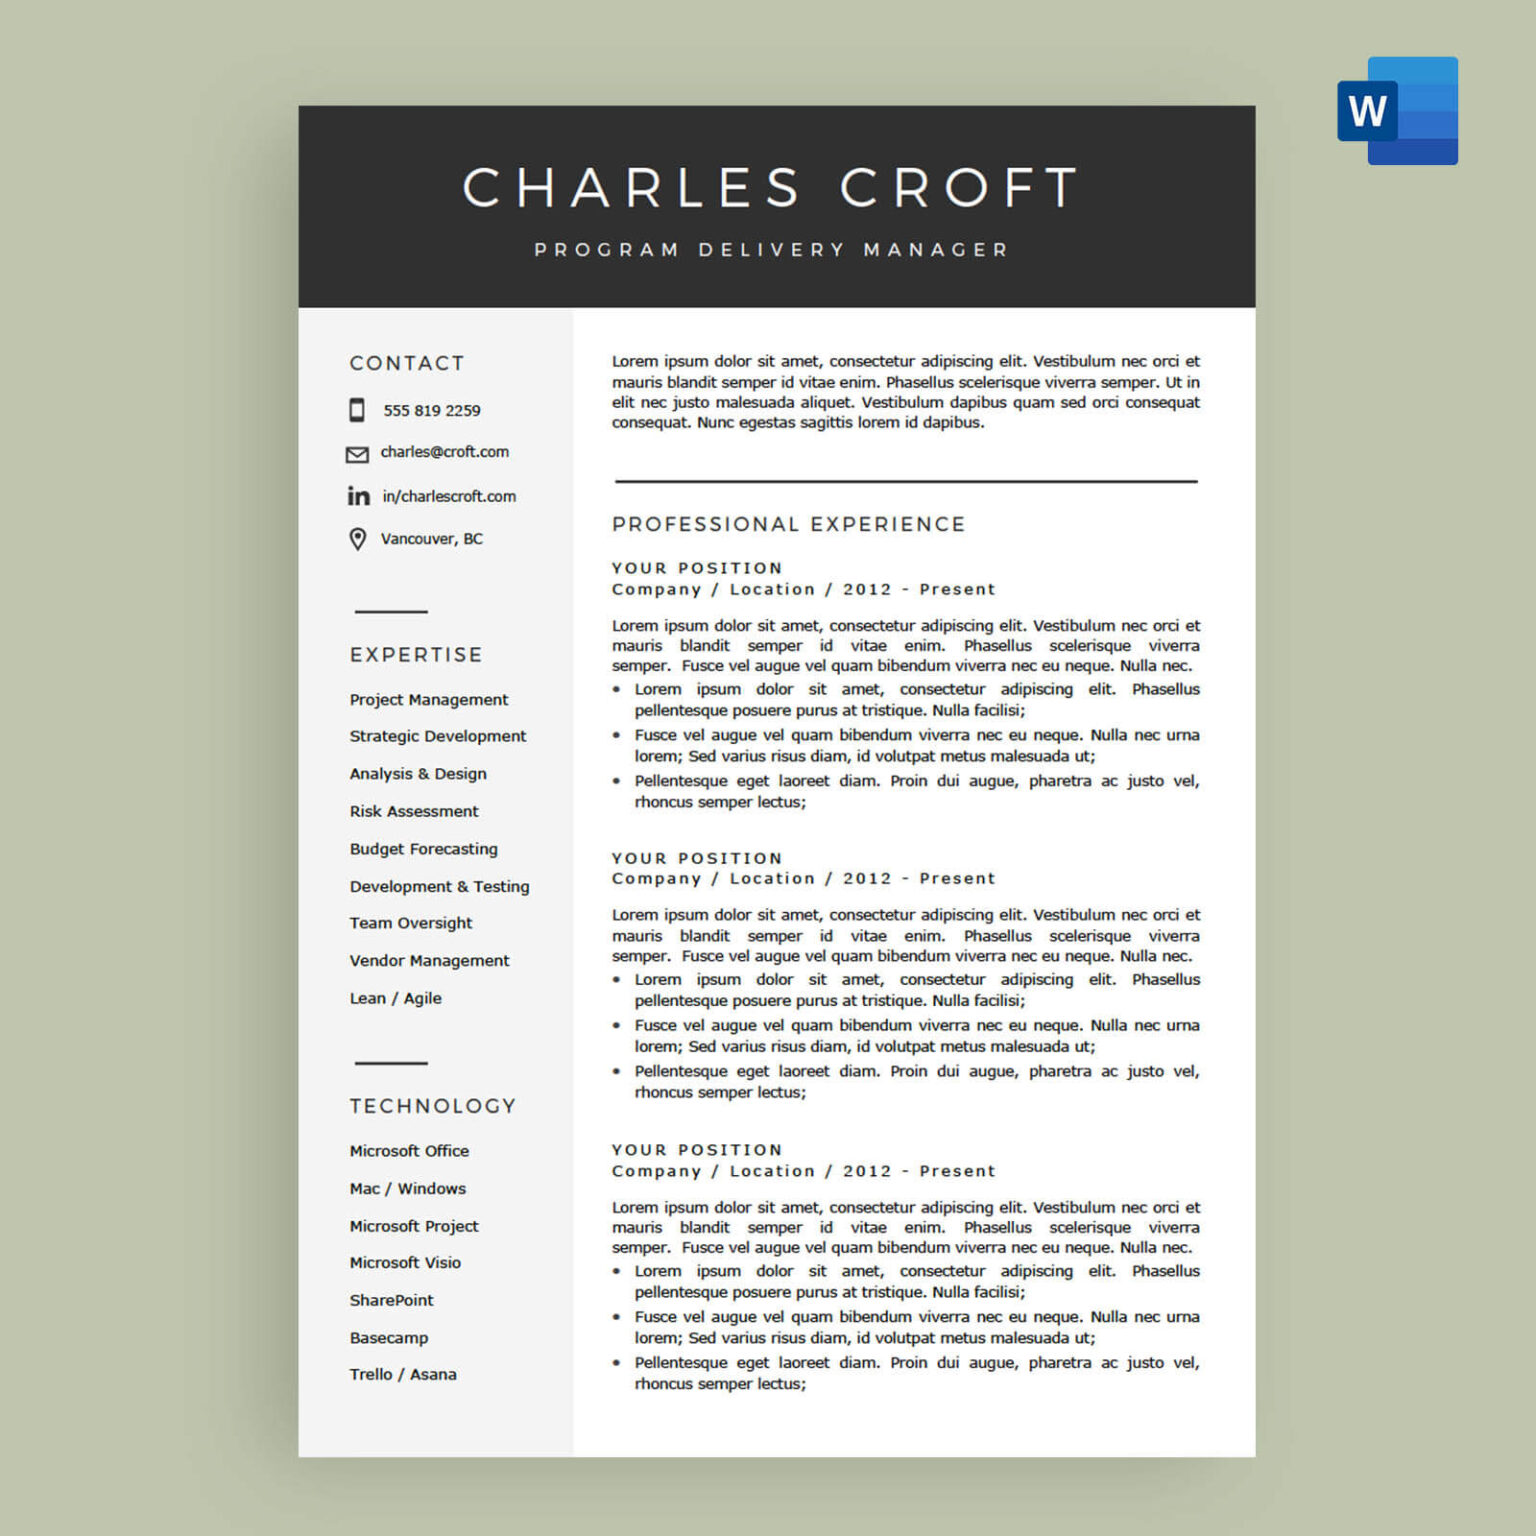 microsoft word free resume template download